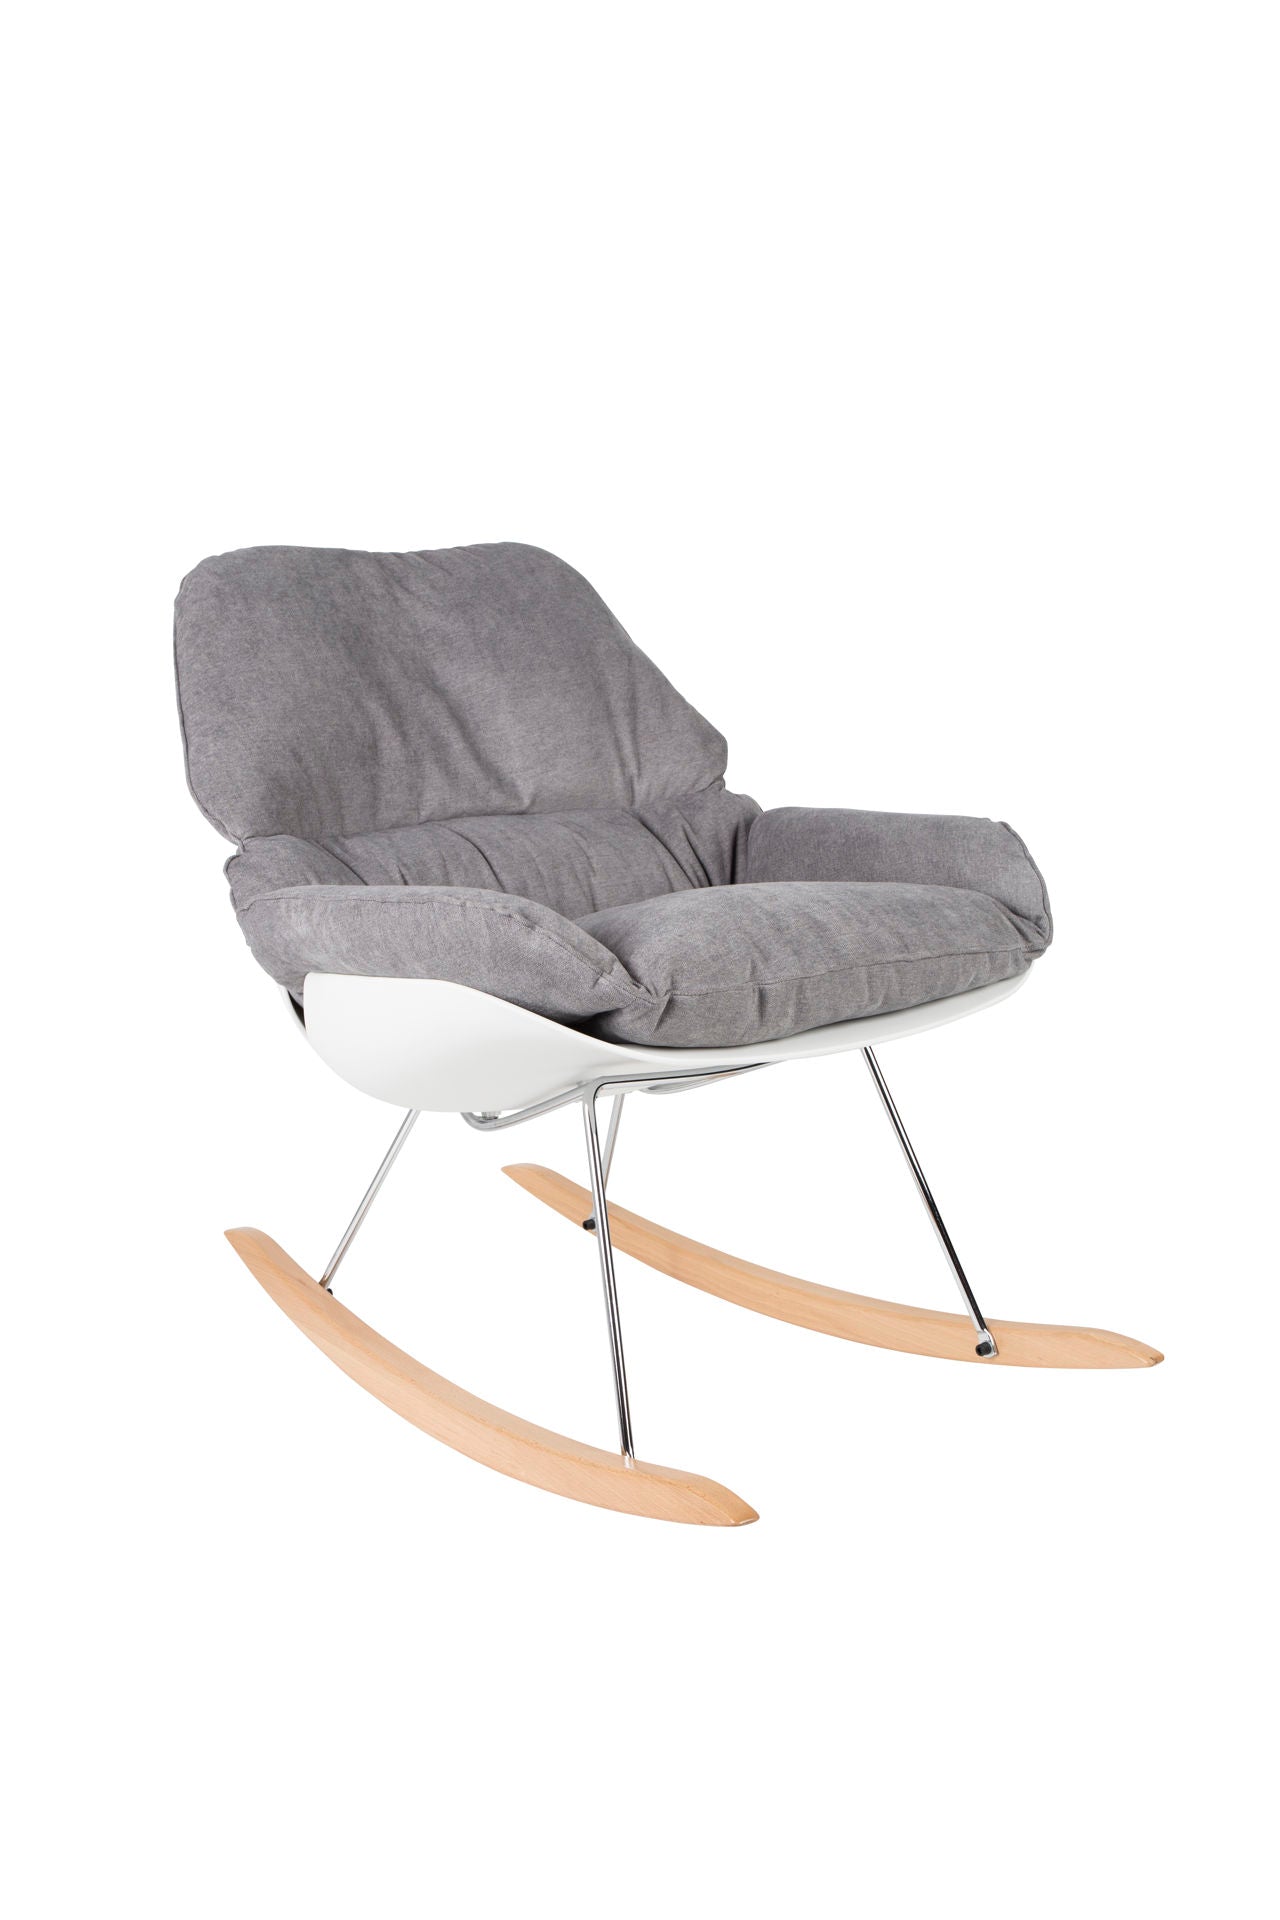 Nancy's East Renton Highlands Lounge Chair - Modern - Gray - Polypropylene, Foam, Wood - 98 cm x 76 cm x 84 cm